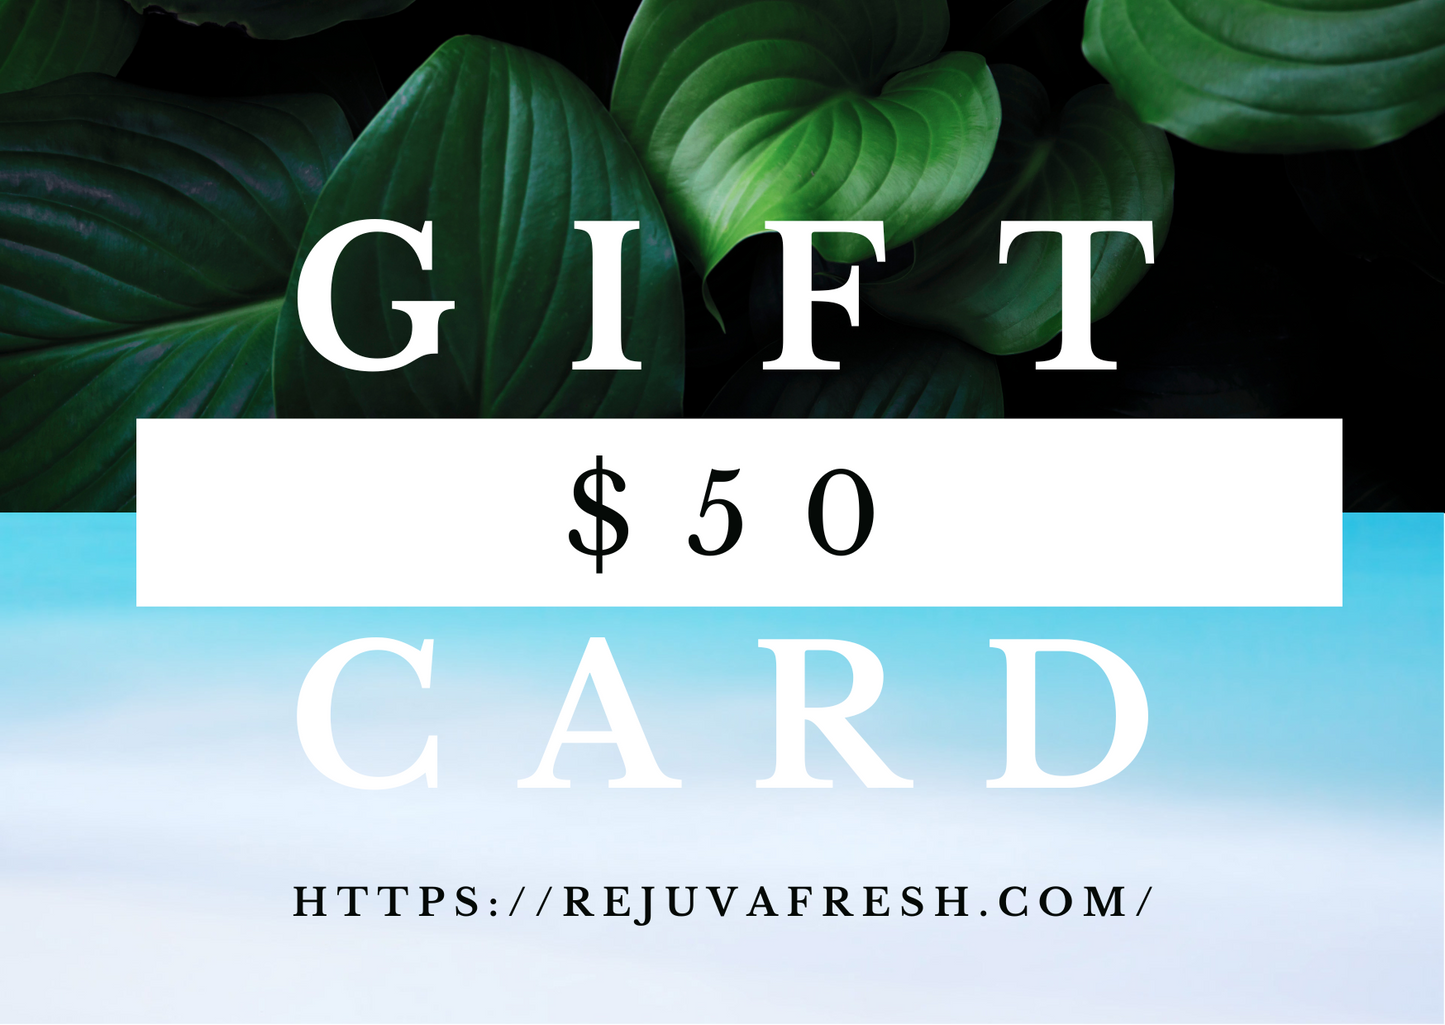 Gift Card for Rejuva Fresh website, Fifty Dollars,  green leaves, blue water